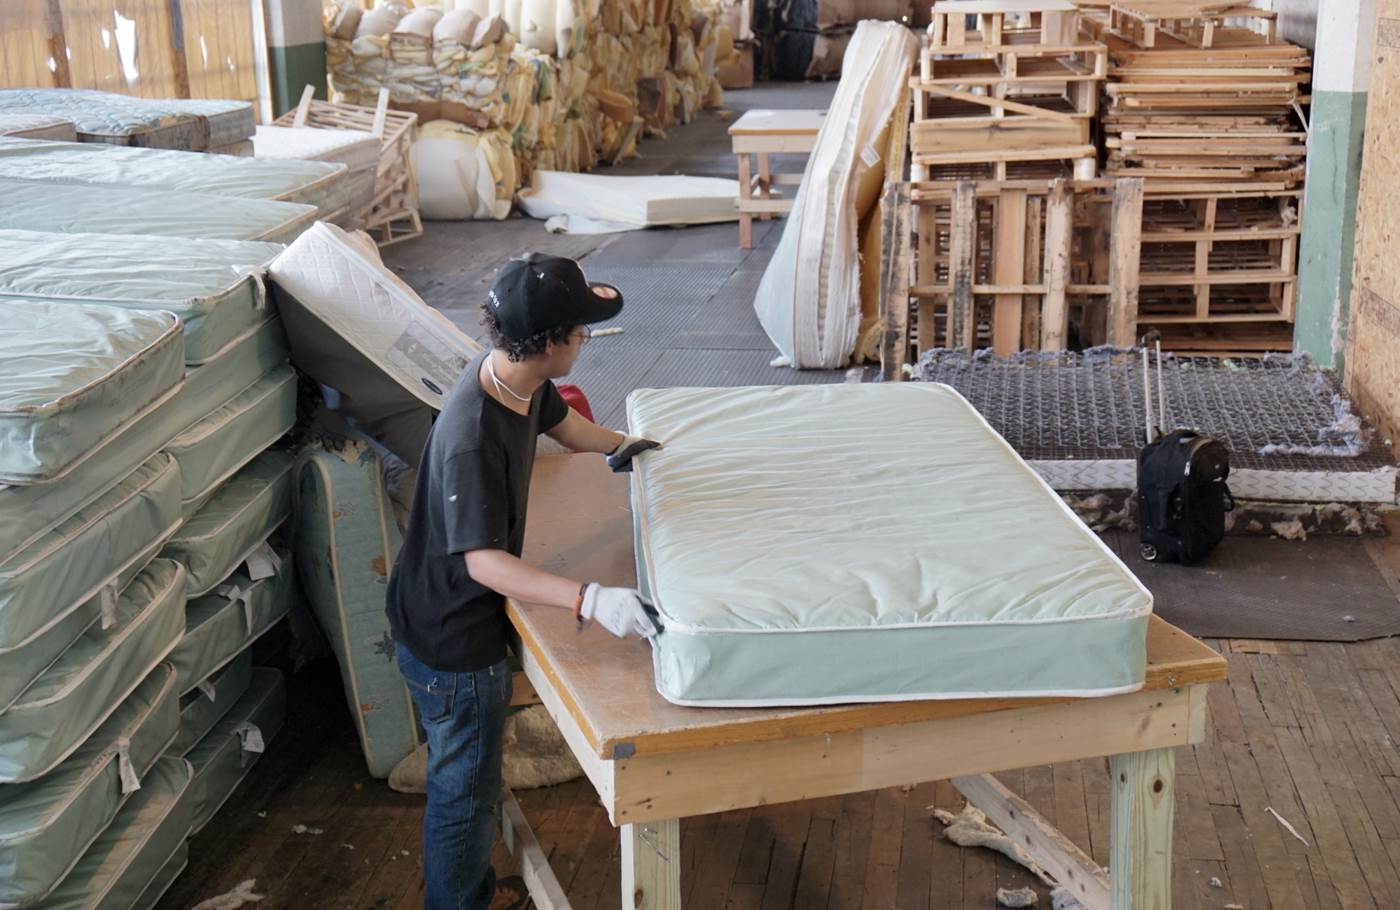 mattress recycle colorado springsbodx spring